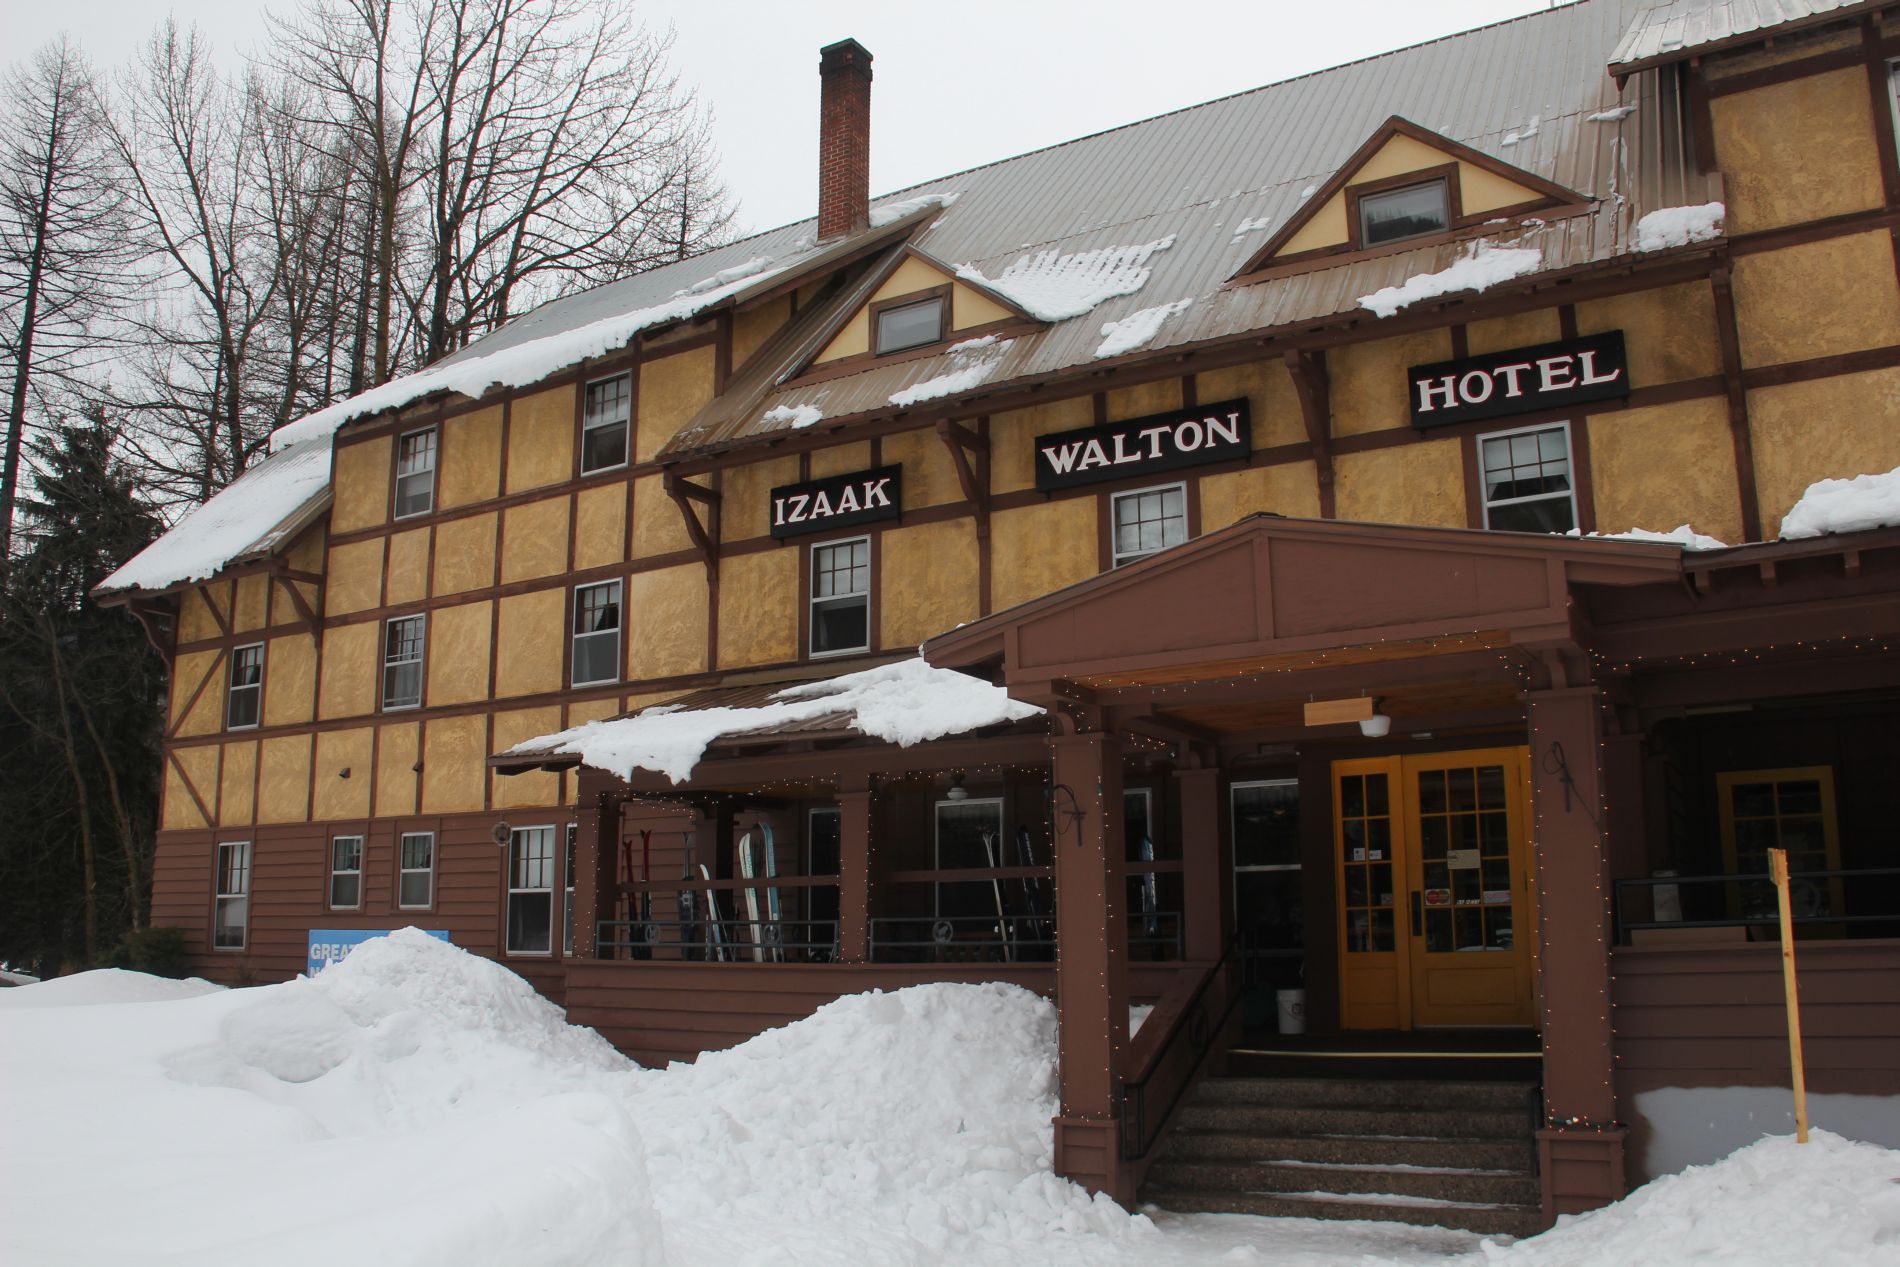 The Izaak Walton Inn in Essex, Montana